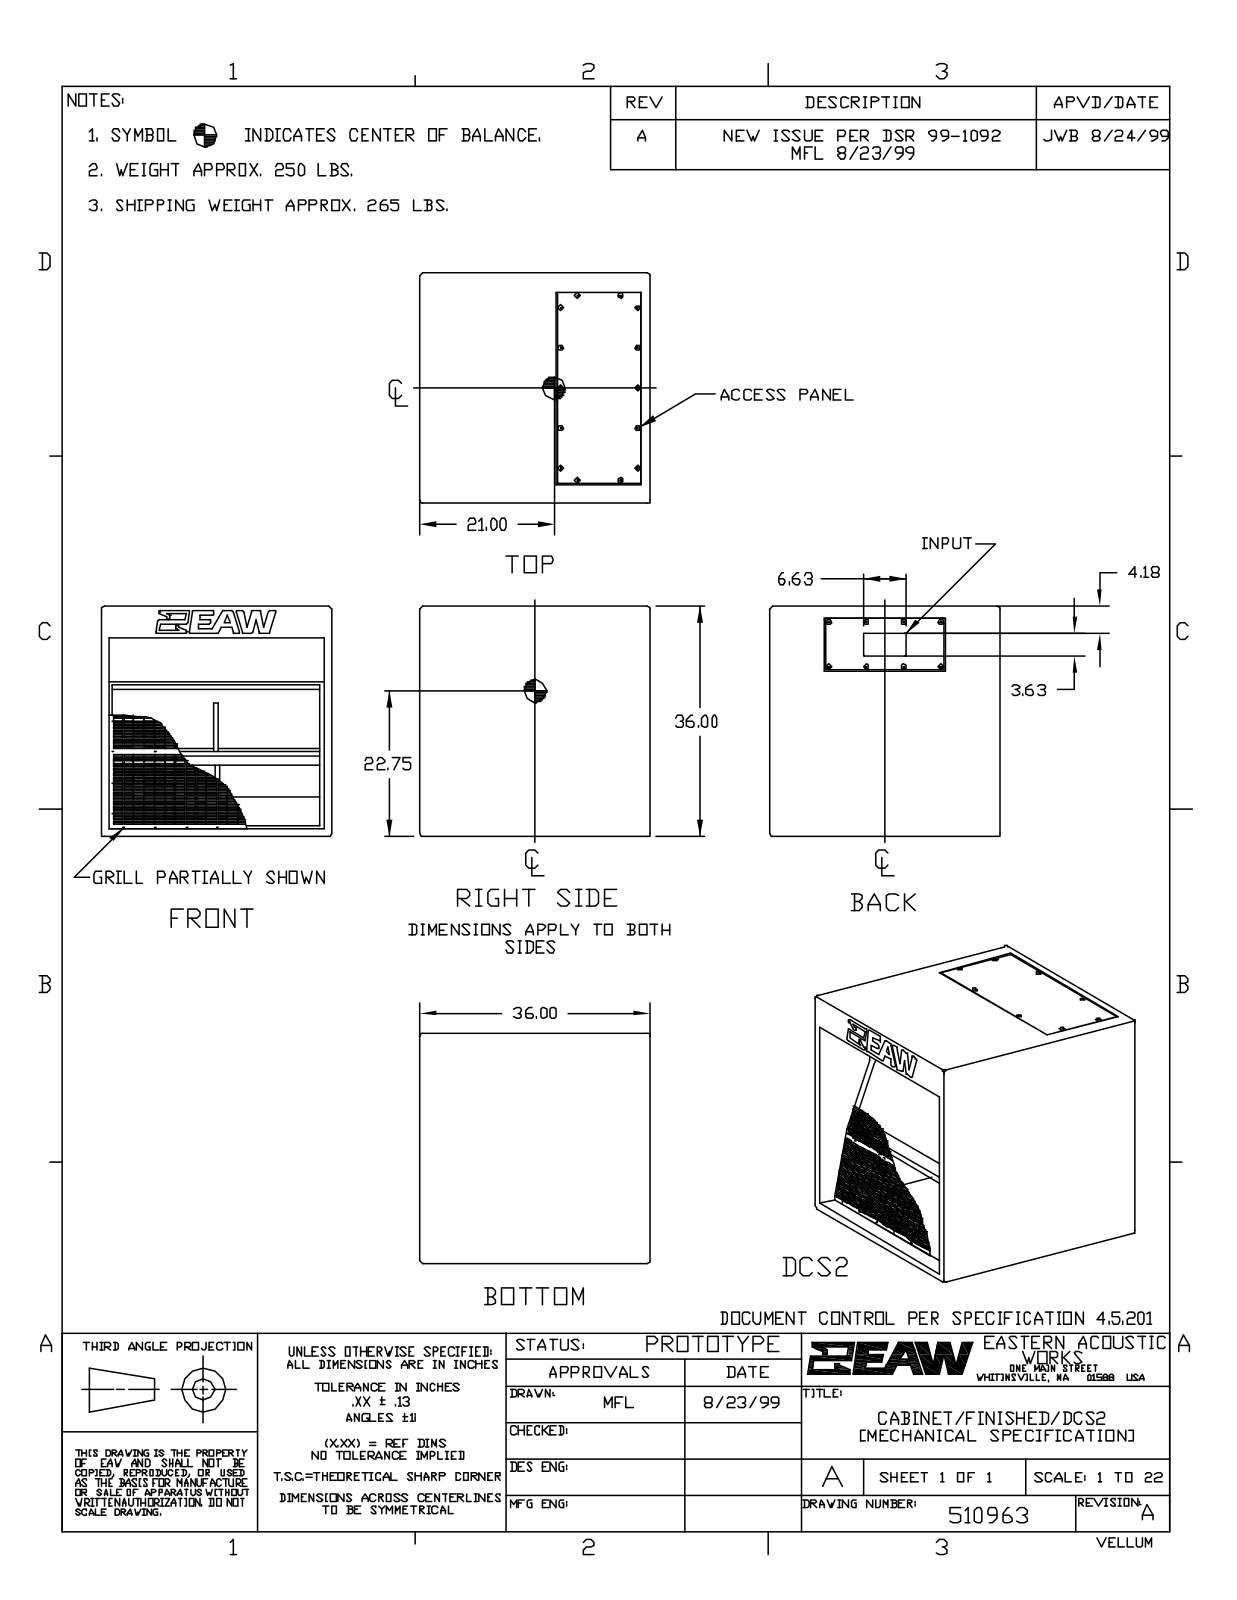 Panasonic DCS2 DRW2D Service Manual